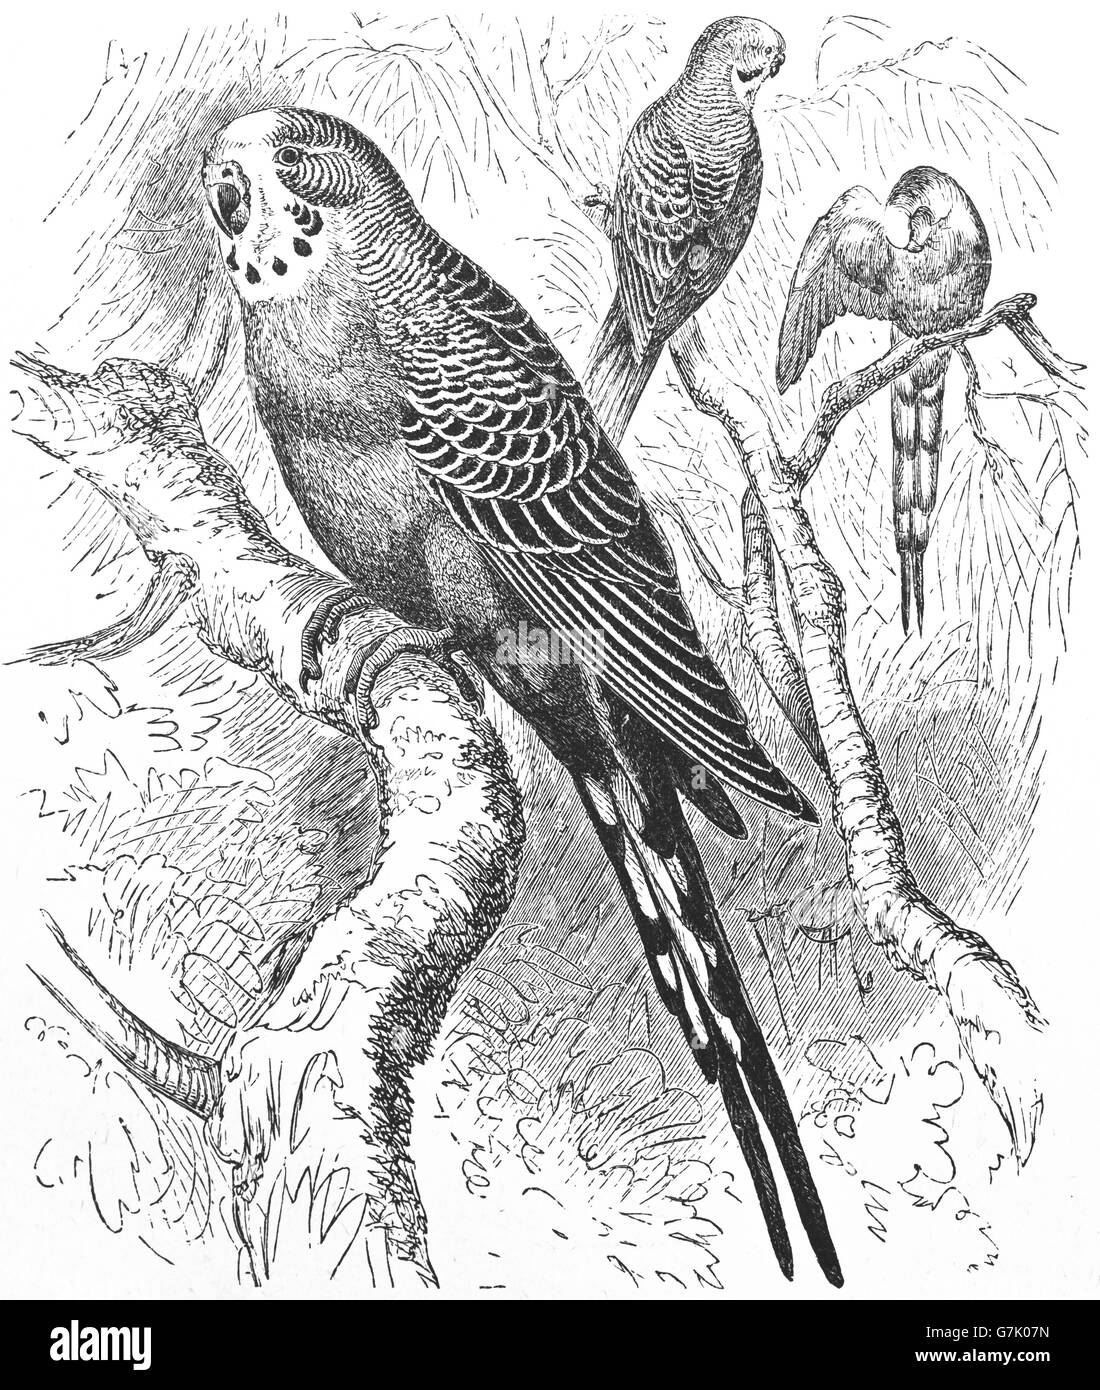 Budgerigar, Melopsittacus undulatus, common pet parakeet, illustration from book dated 1904 Stock Photo